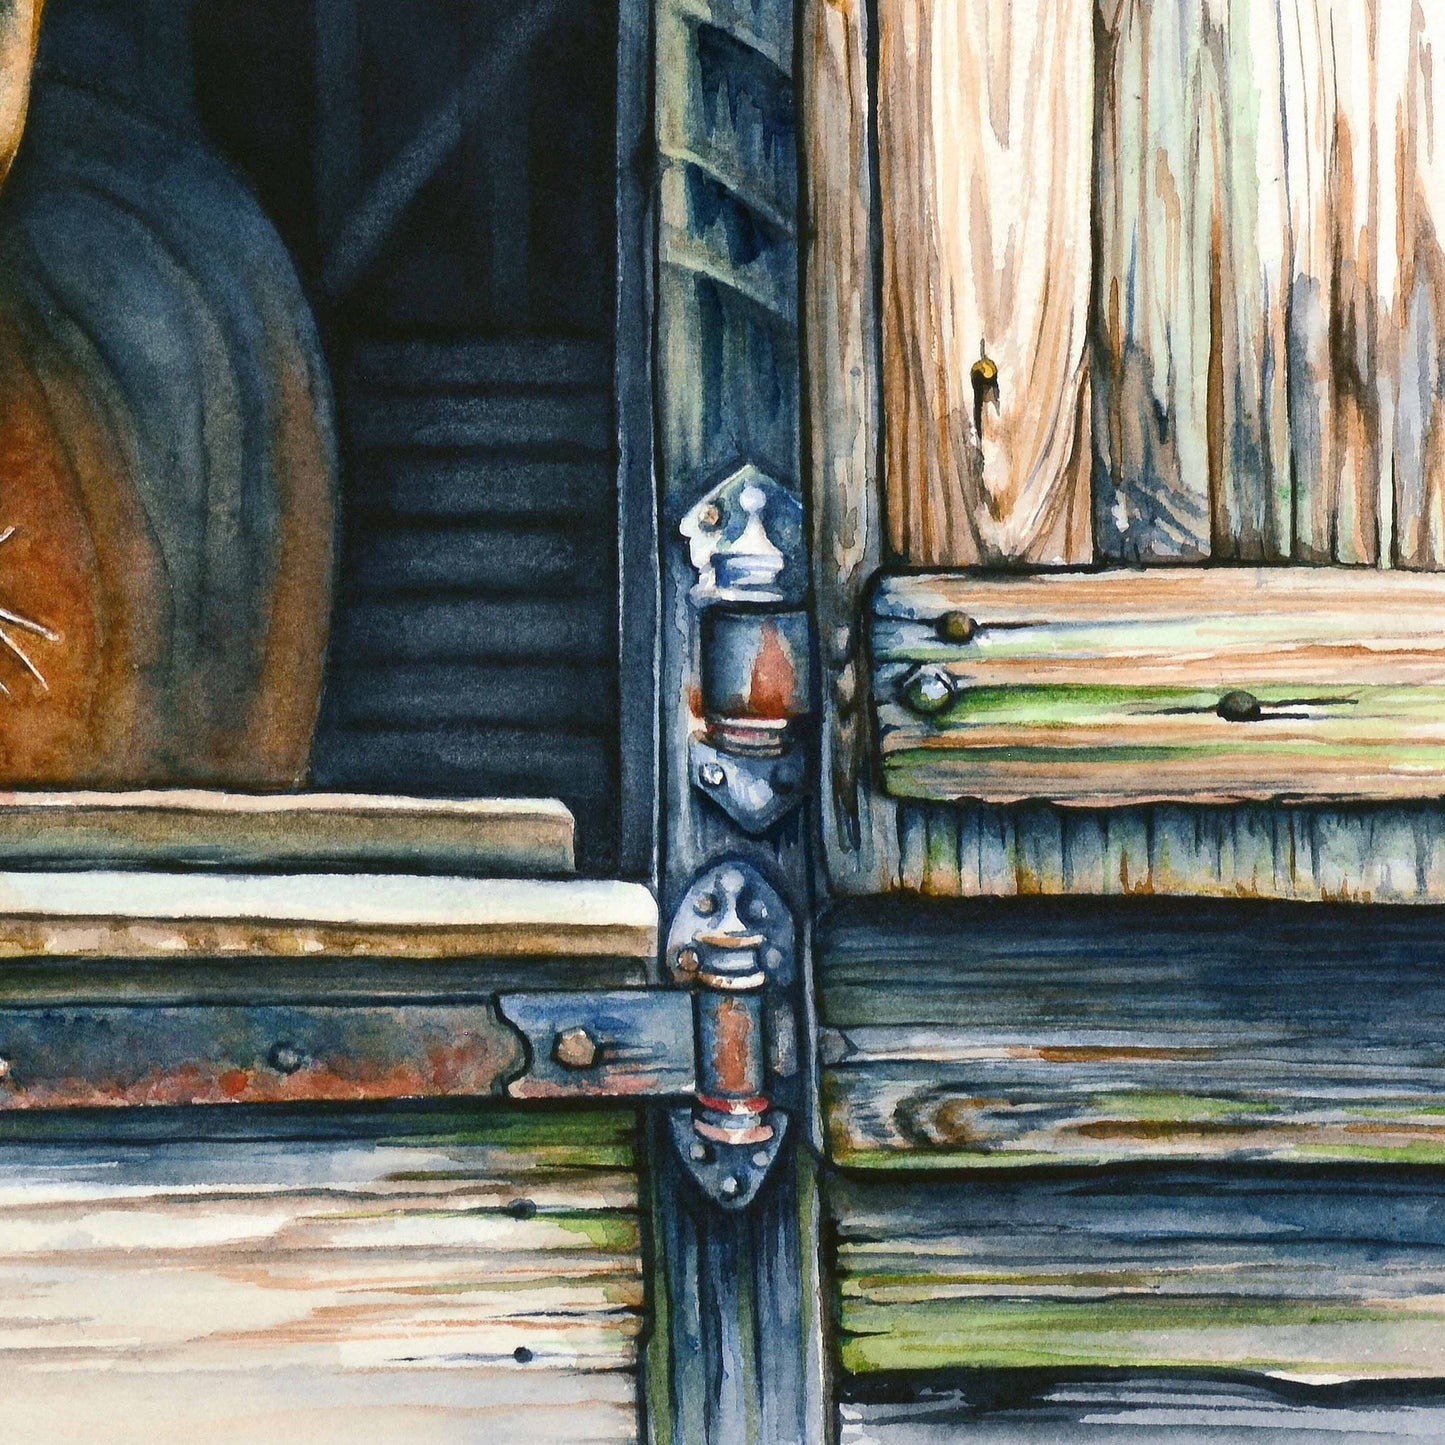 Horse in Barn - Giclée Watercolor Print